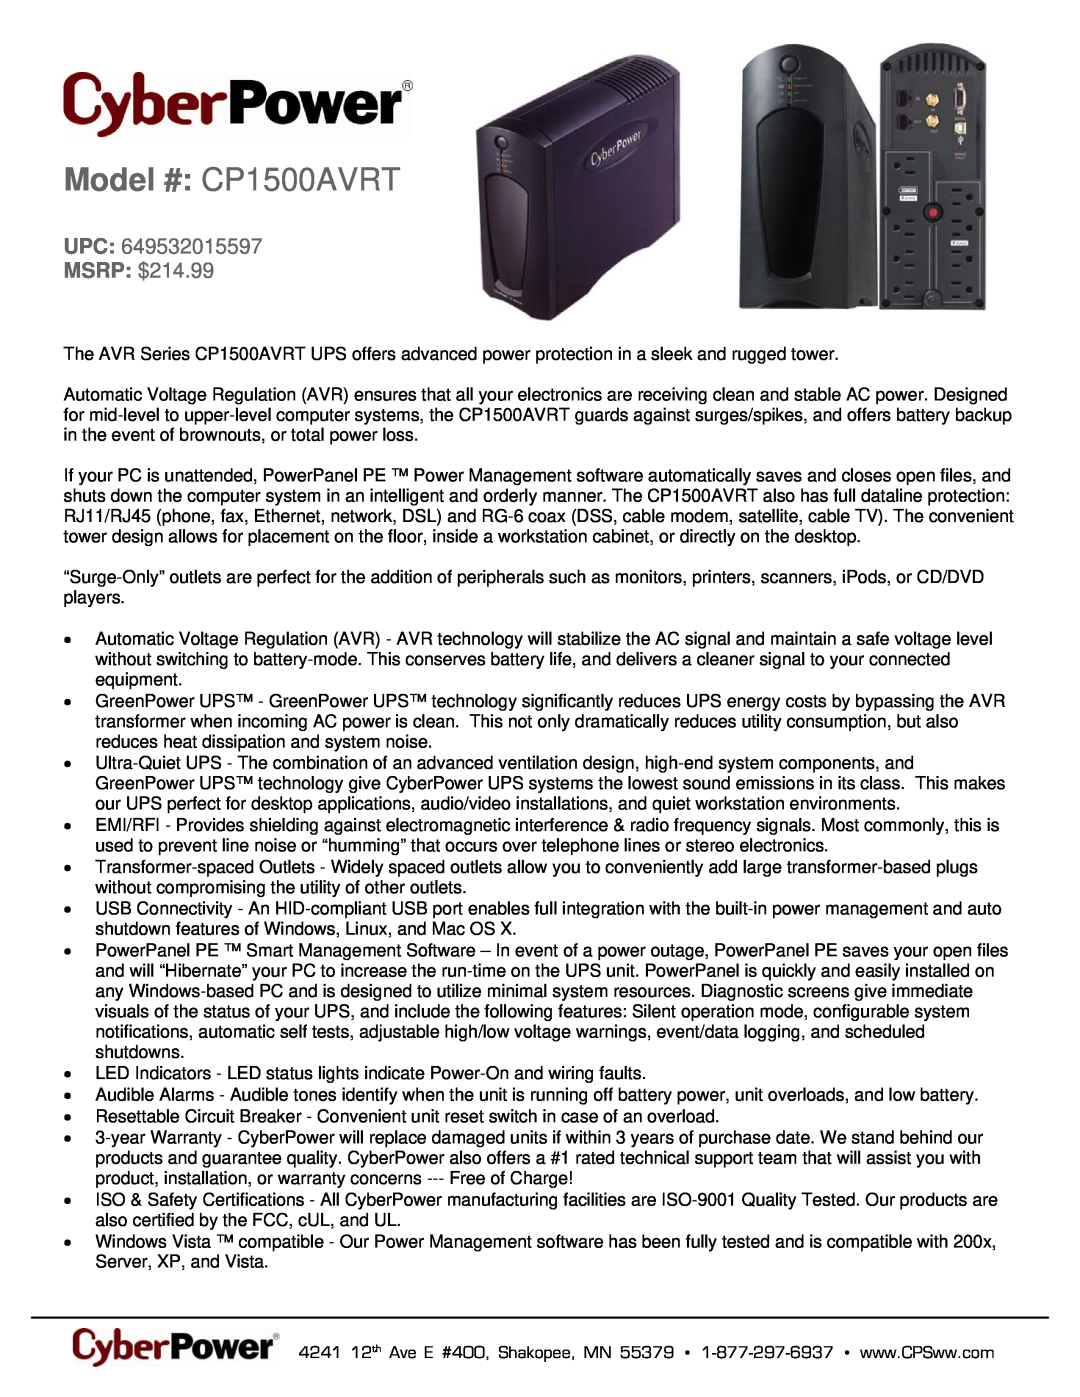 CyberPower Systems 649532015597 warranty Model # CP1500AVRT, UPC MSRP $214.99 